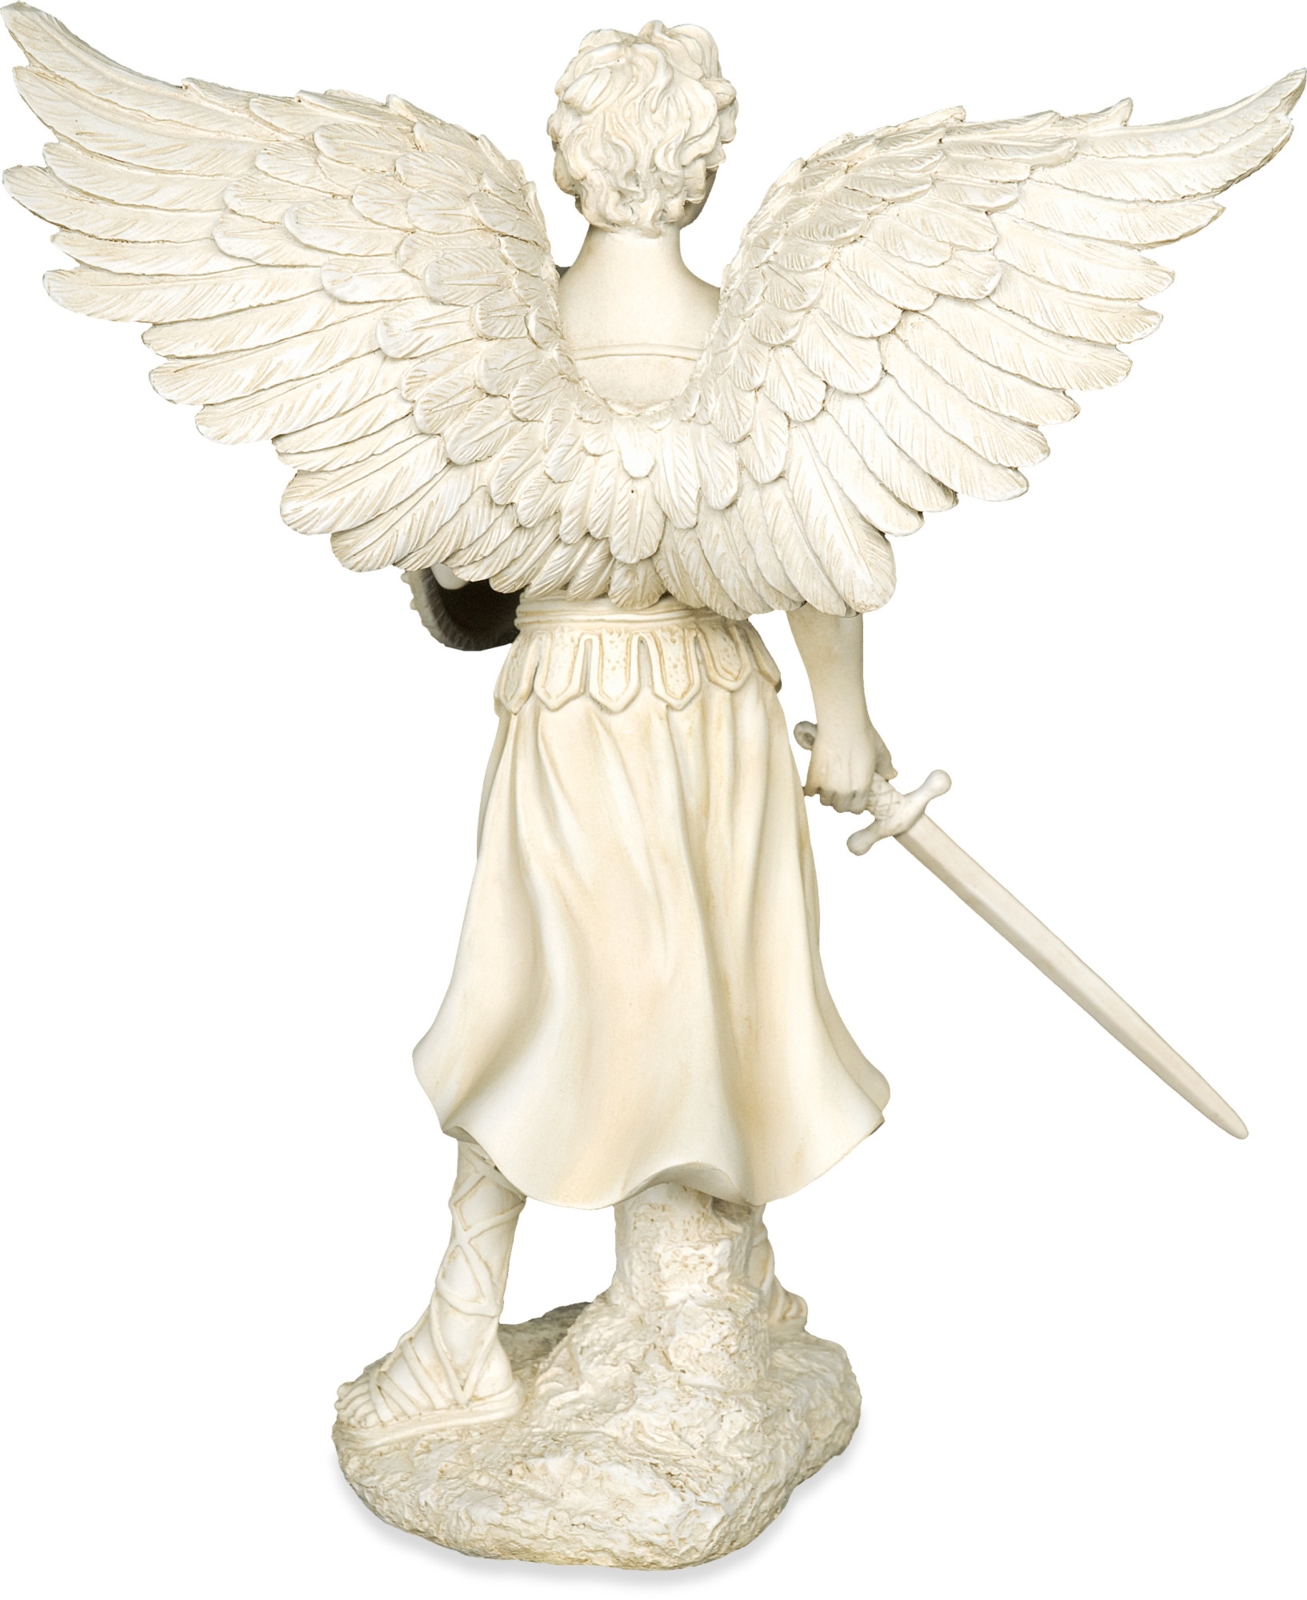 Archangel Michael Figurine by Angel Star - Something Different